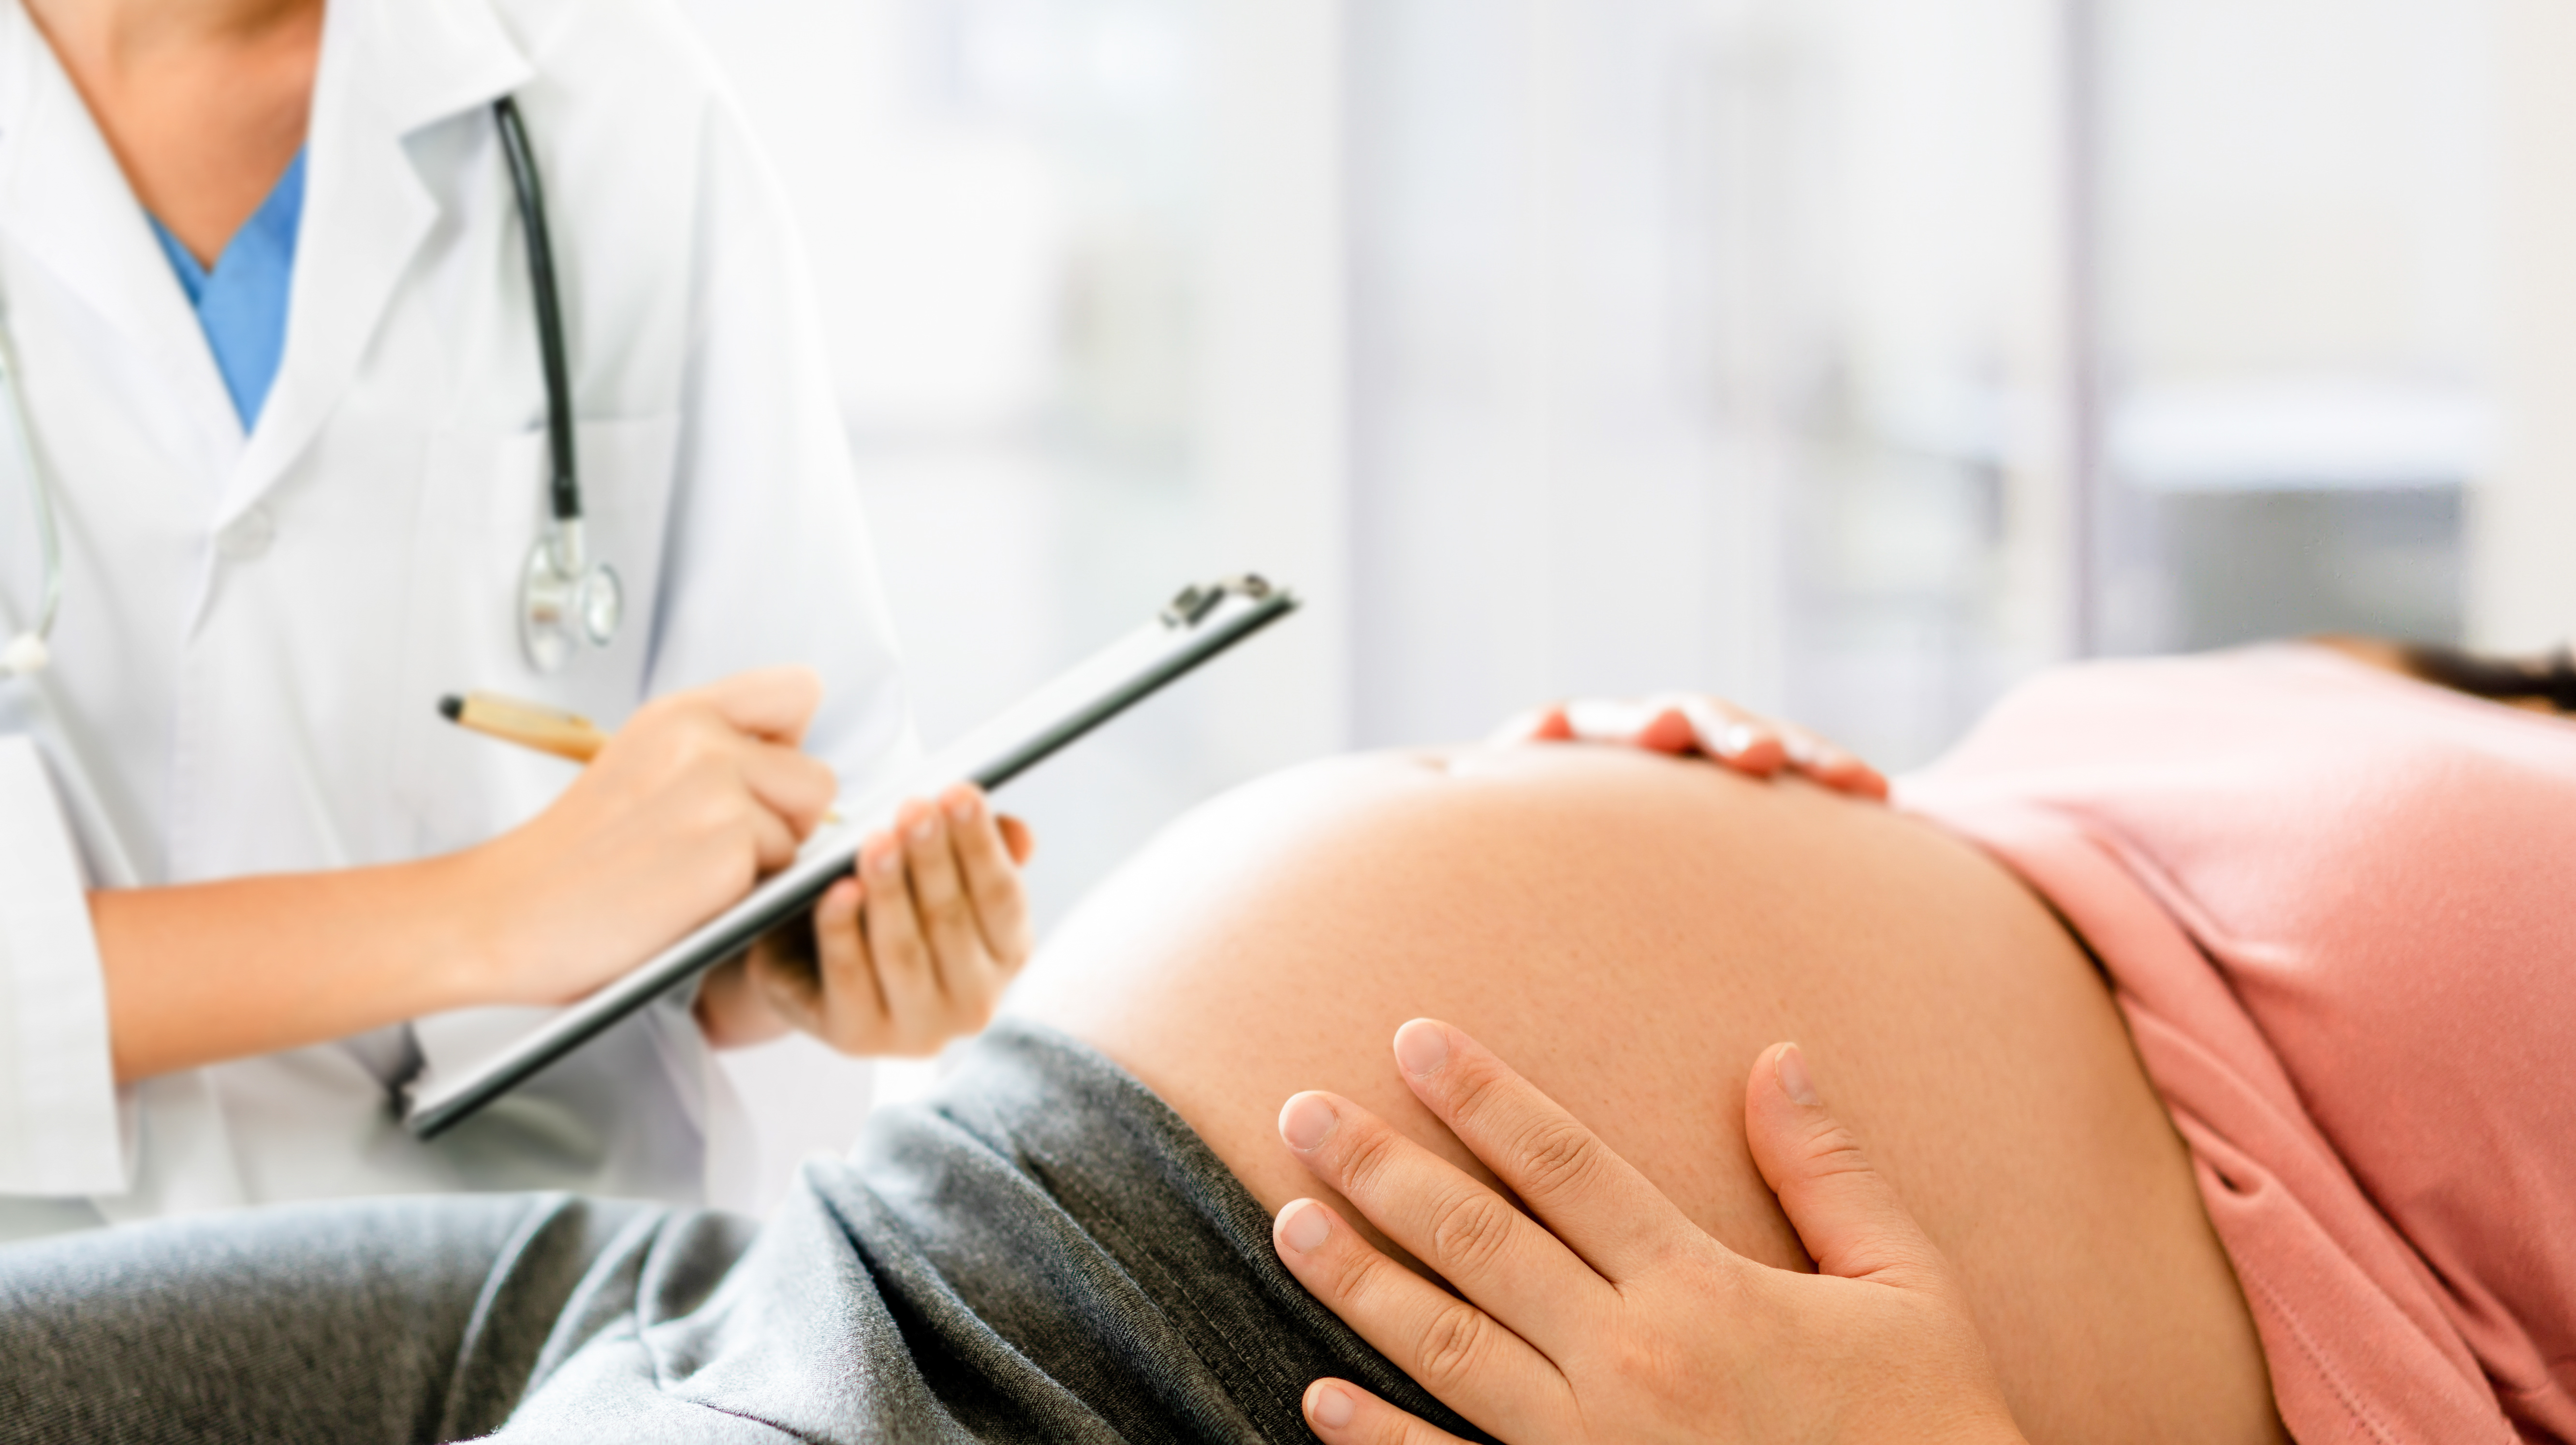 Clinical Seminar: Fetal Monitoring in Practice - October 2014